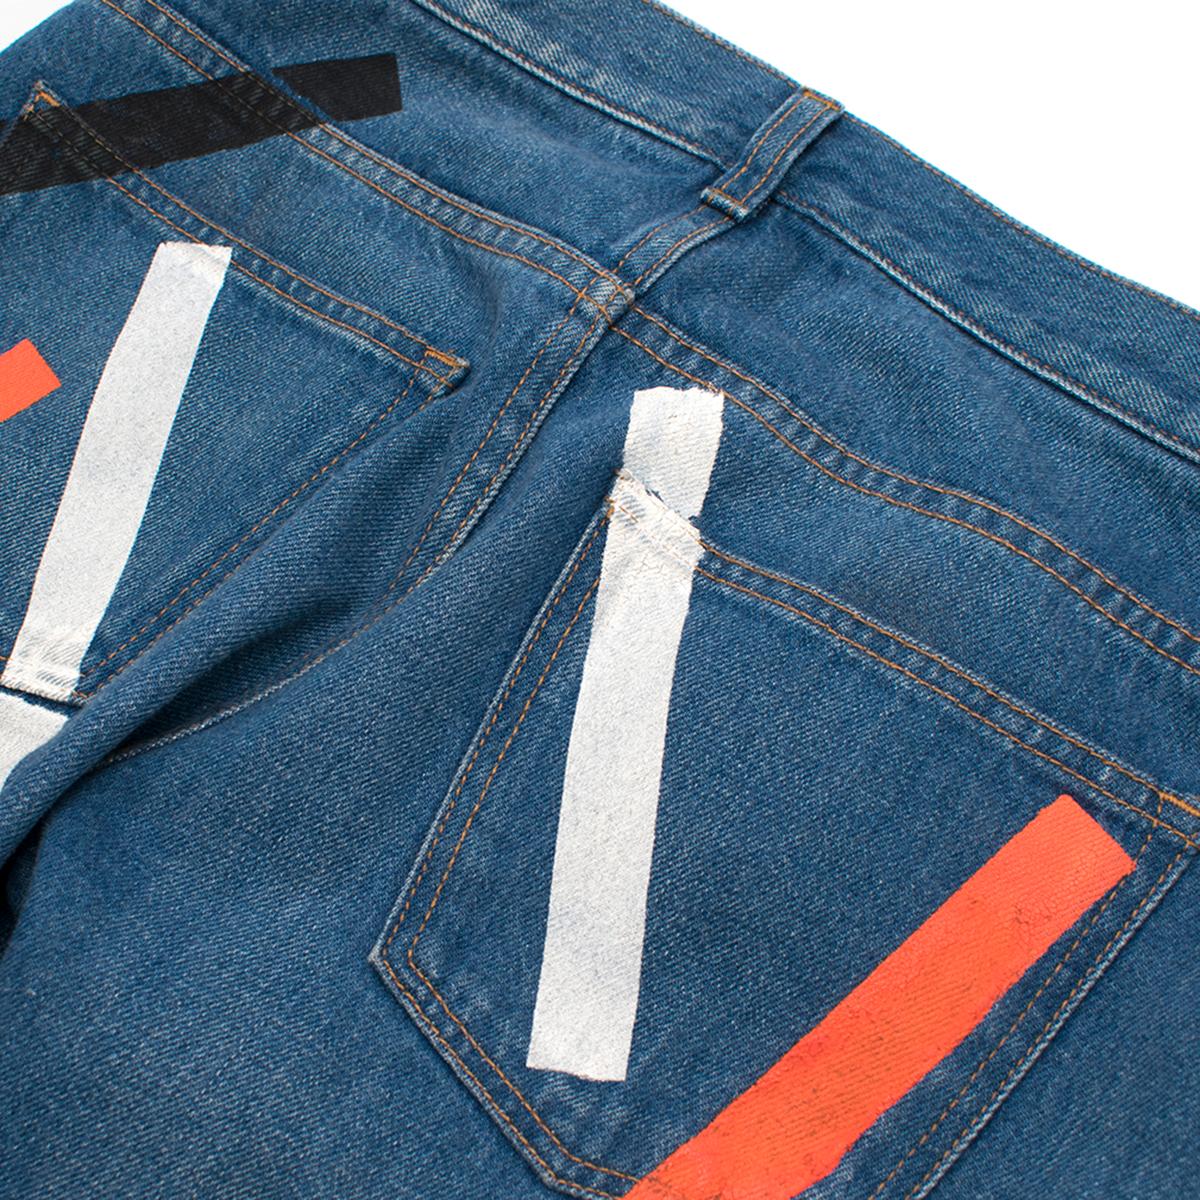 Women's Christopher Kane Denim Jeans with Multicolor Paint Detail Size 26